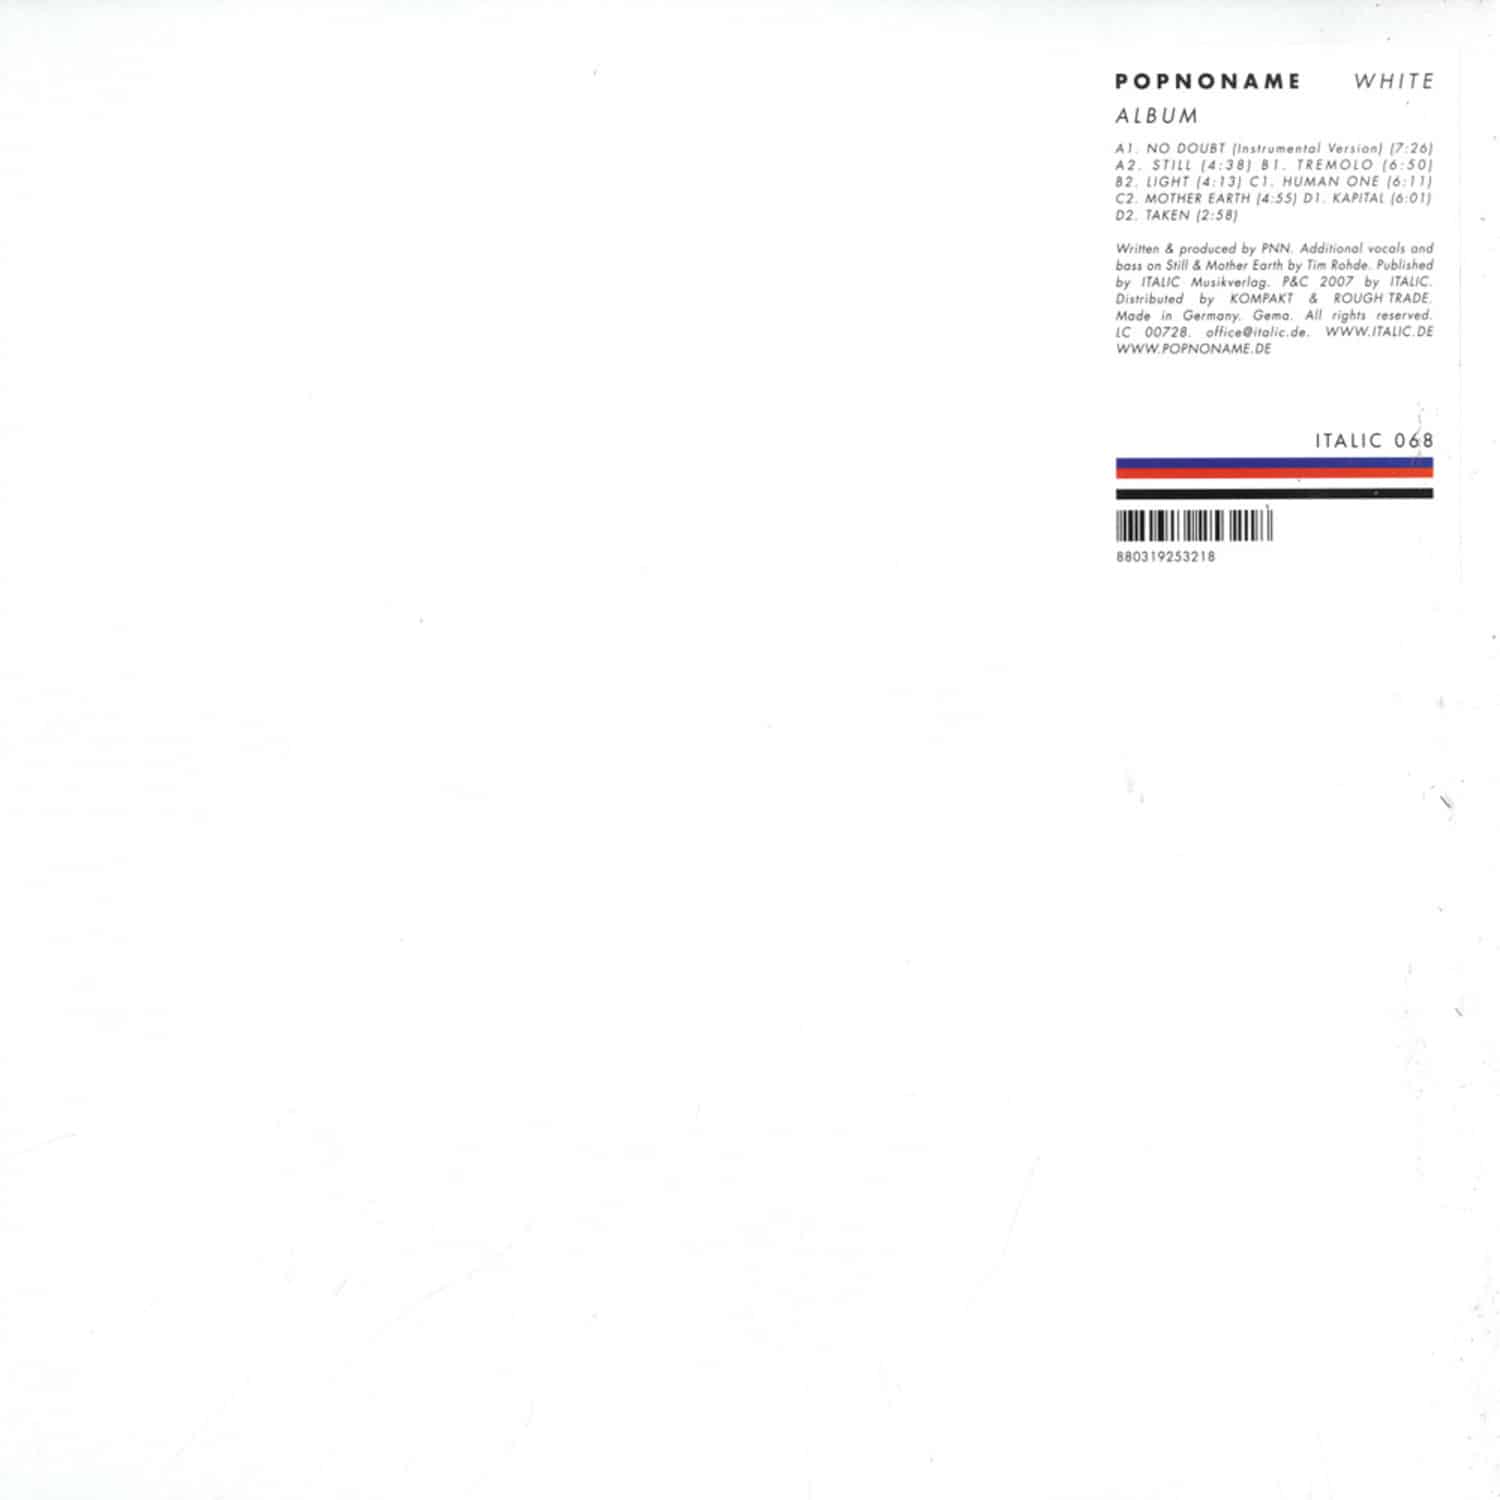 Popnoname - WHITE ALBUM 